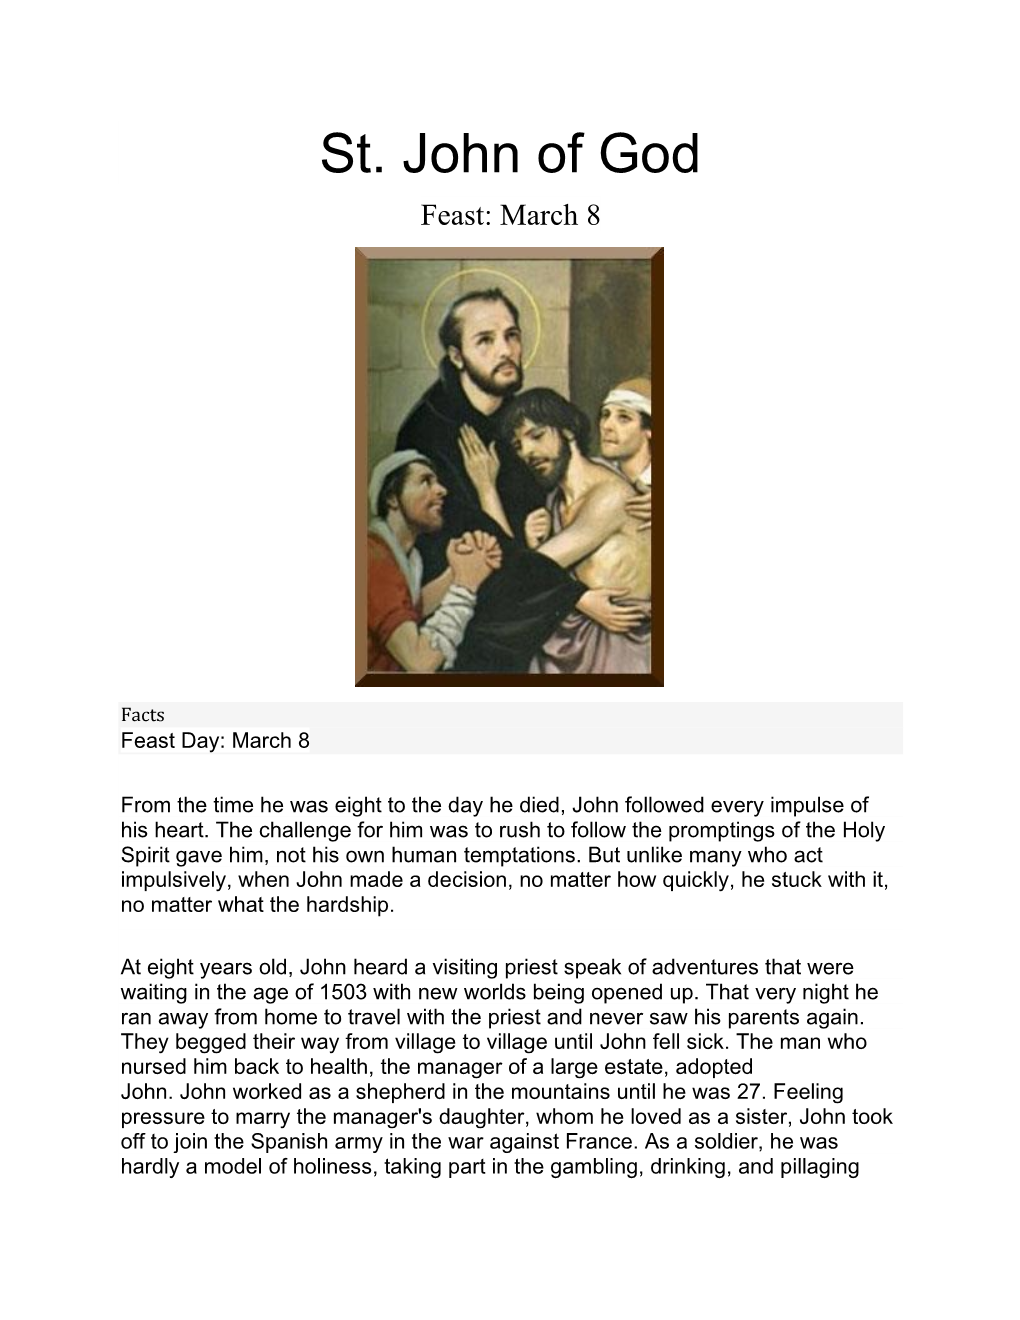 St. John of God Feast: March 8